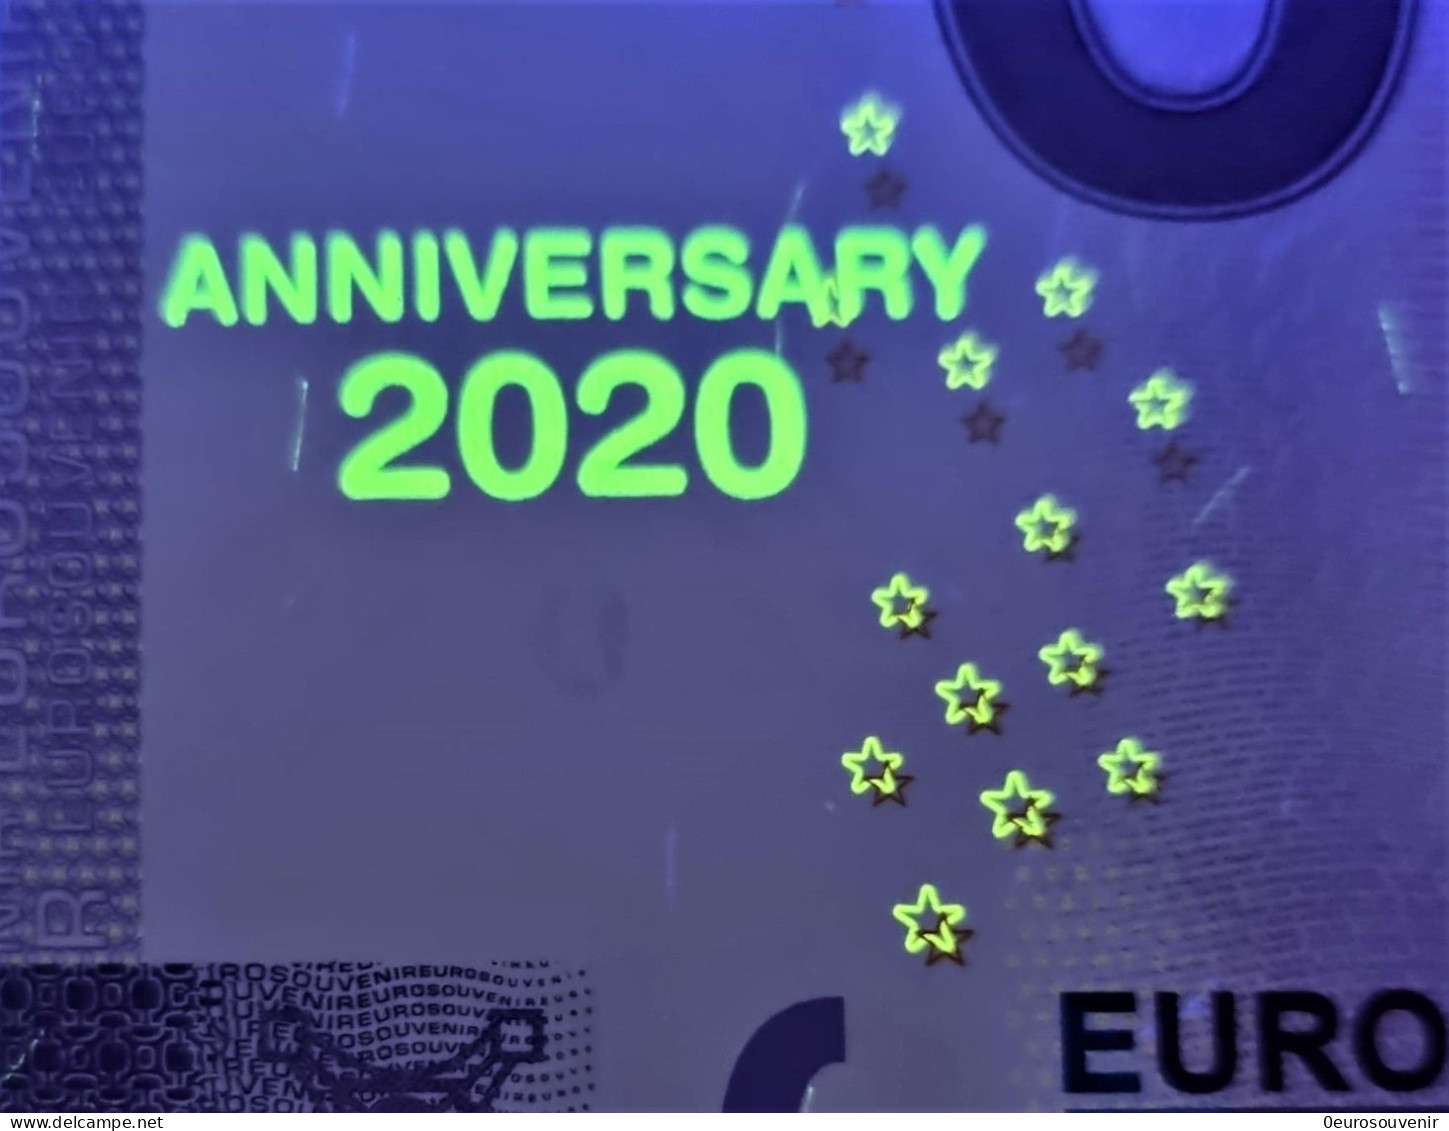 0-Euro XEMC 2021-1 NORDSEEHEILBAD WANGEROOGE - LEUCHTTURM Set NORMAL+ANNIVERSARY - Privatentwürfe